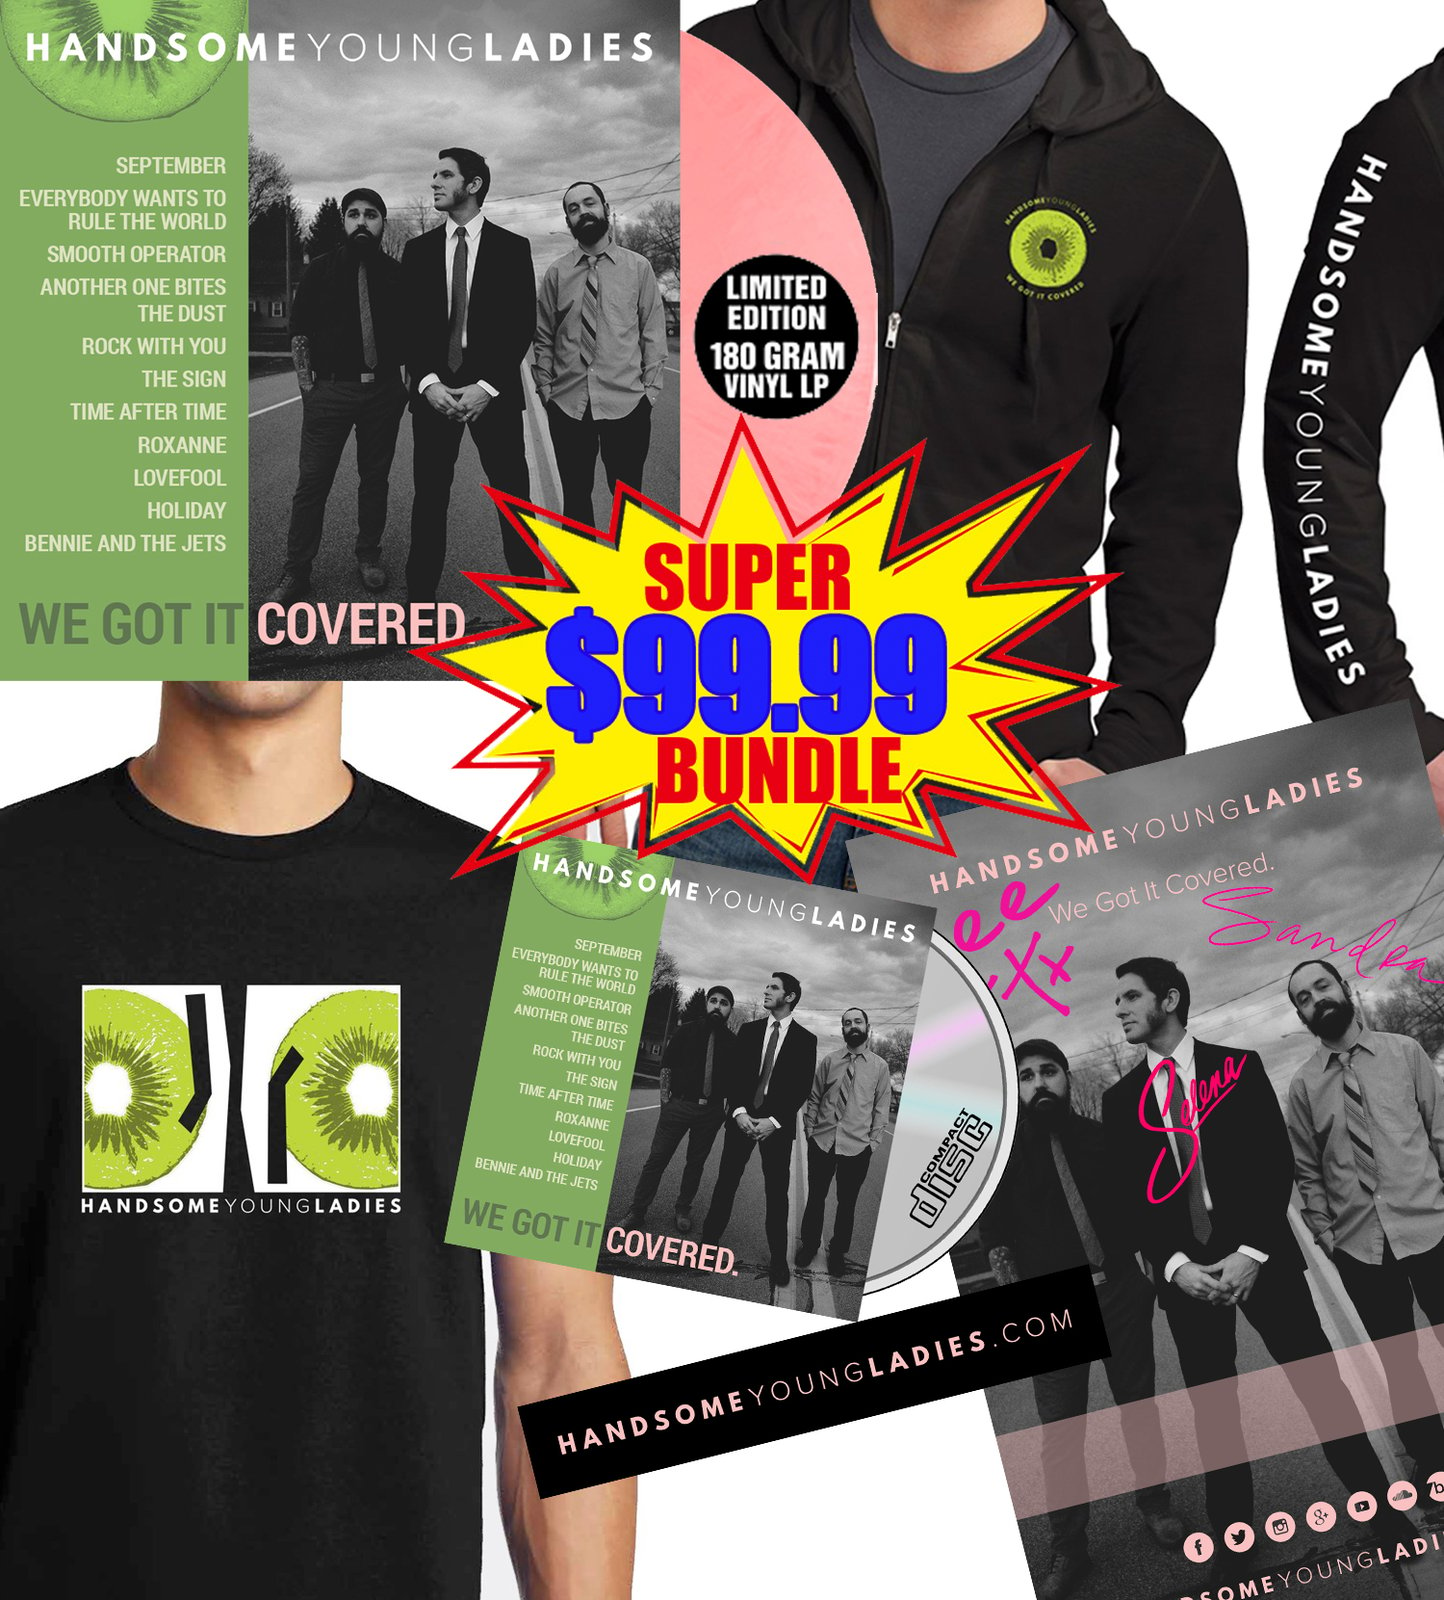 SUPER BUNDLE: XL ONLY (Signed 11x17 Poster + 180 Gram Vinyl LP + CD +  Hoodie + T-Shirt + Sticker)